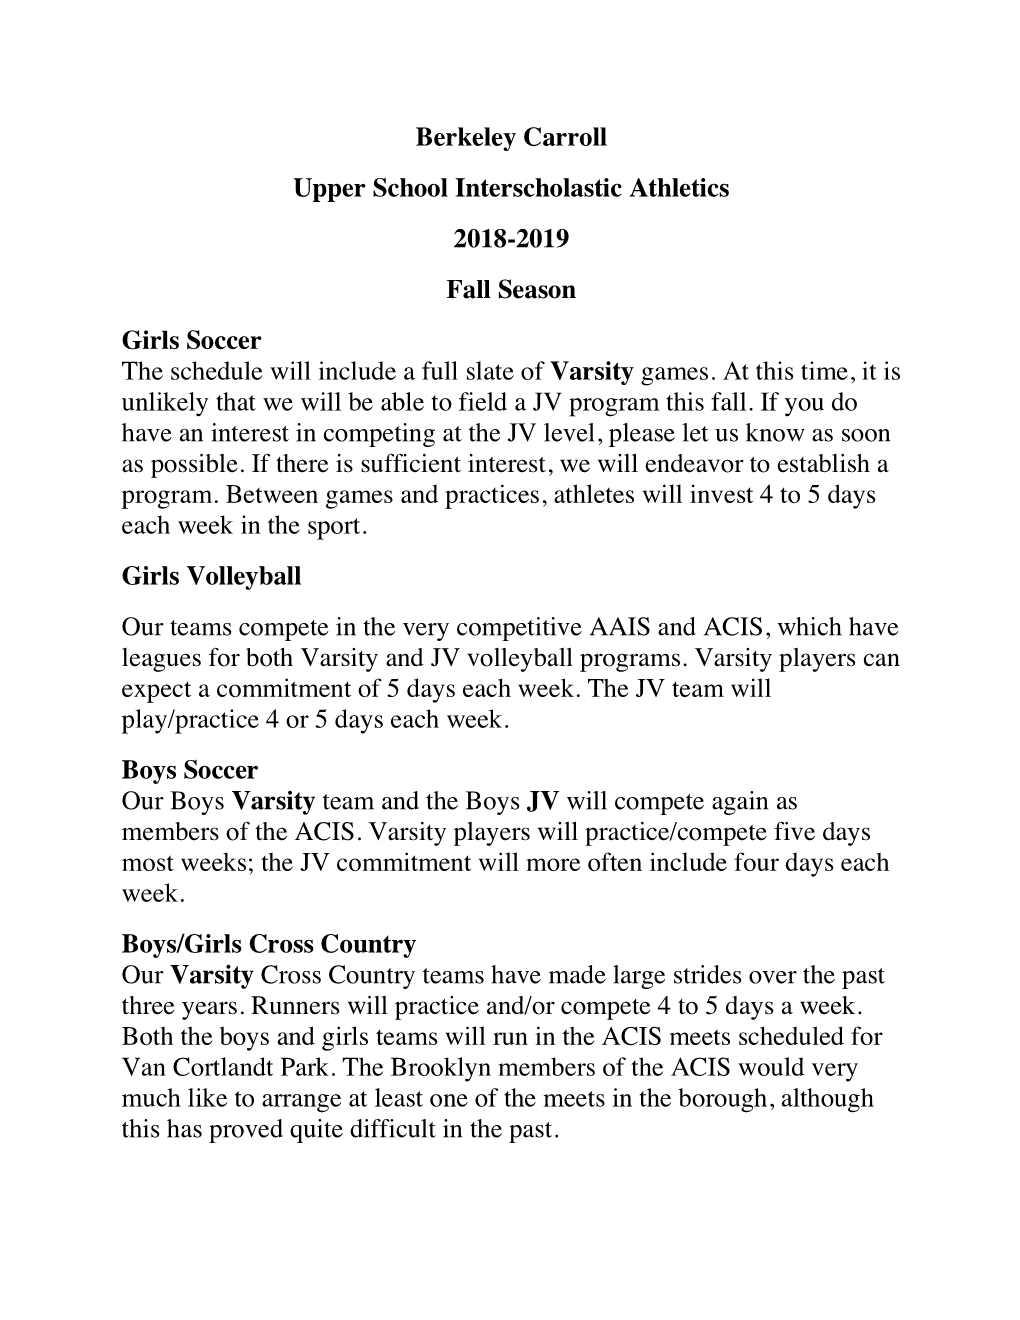 Berkeley Carroll Upper School Interscholastic Athletics 2018-2019